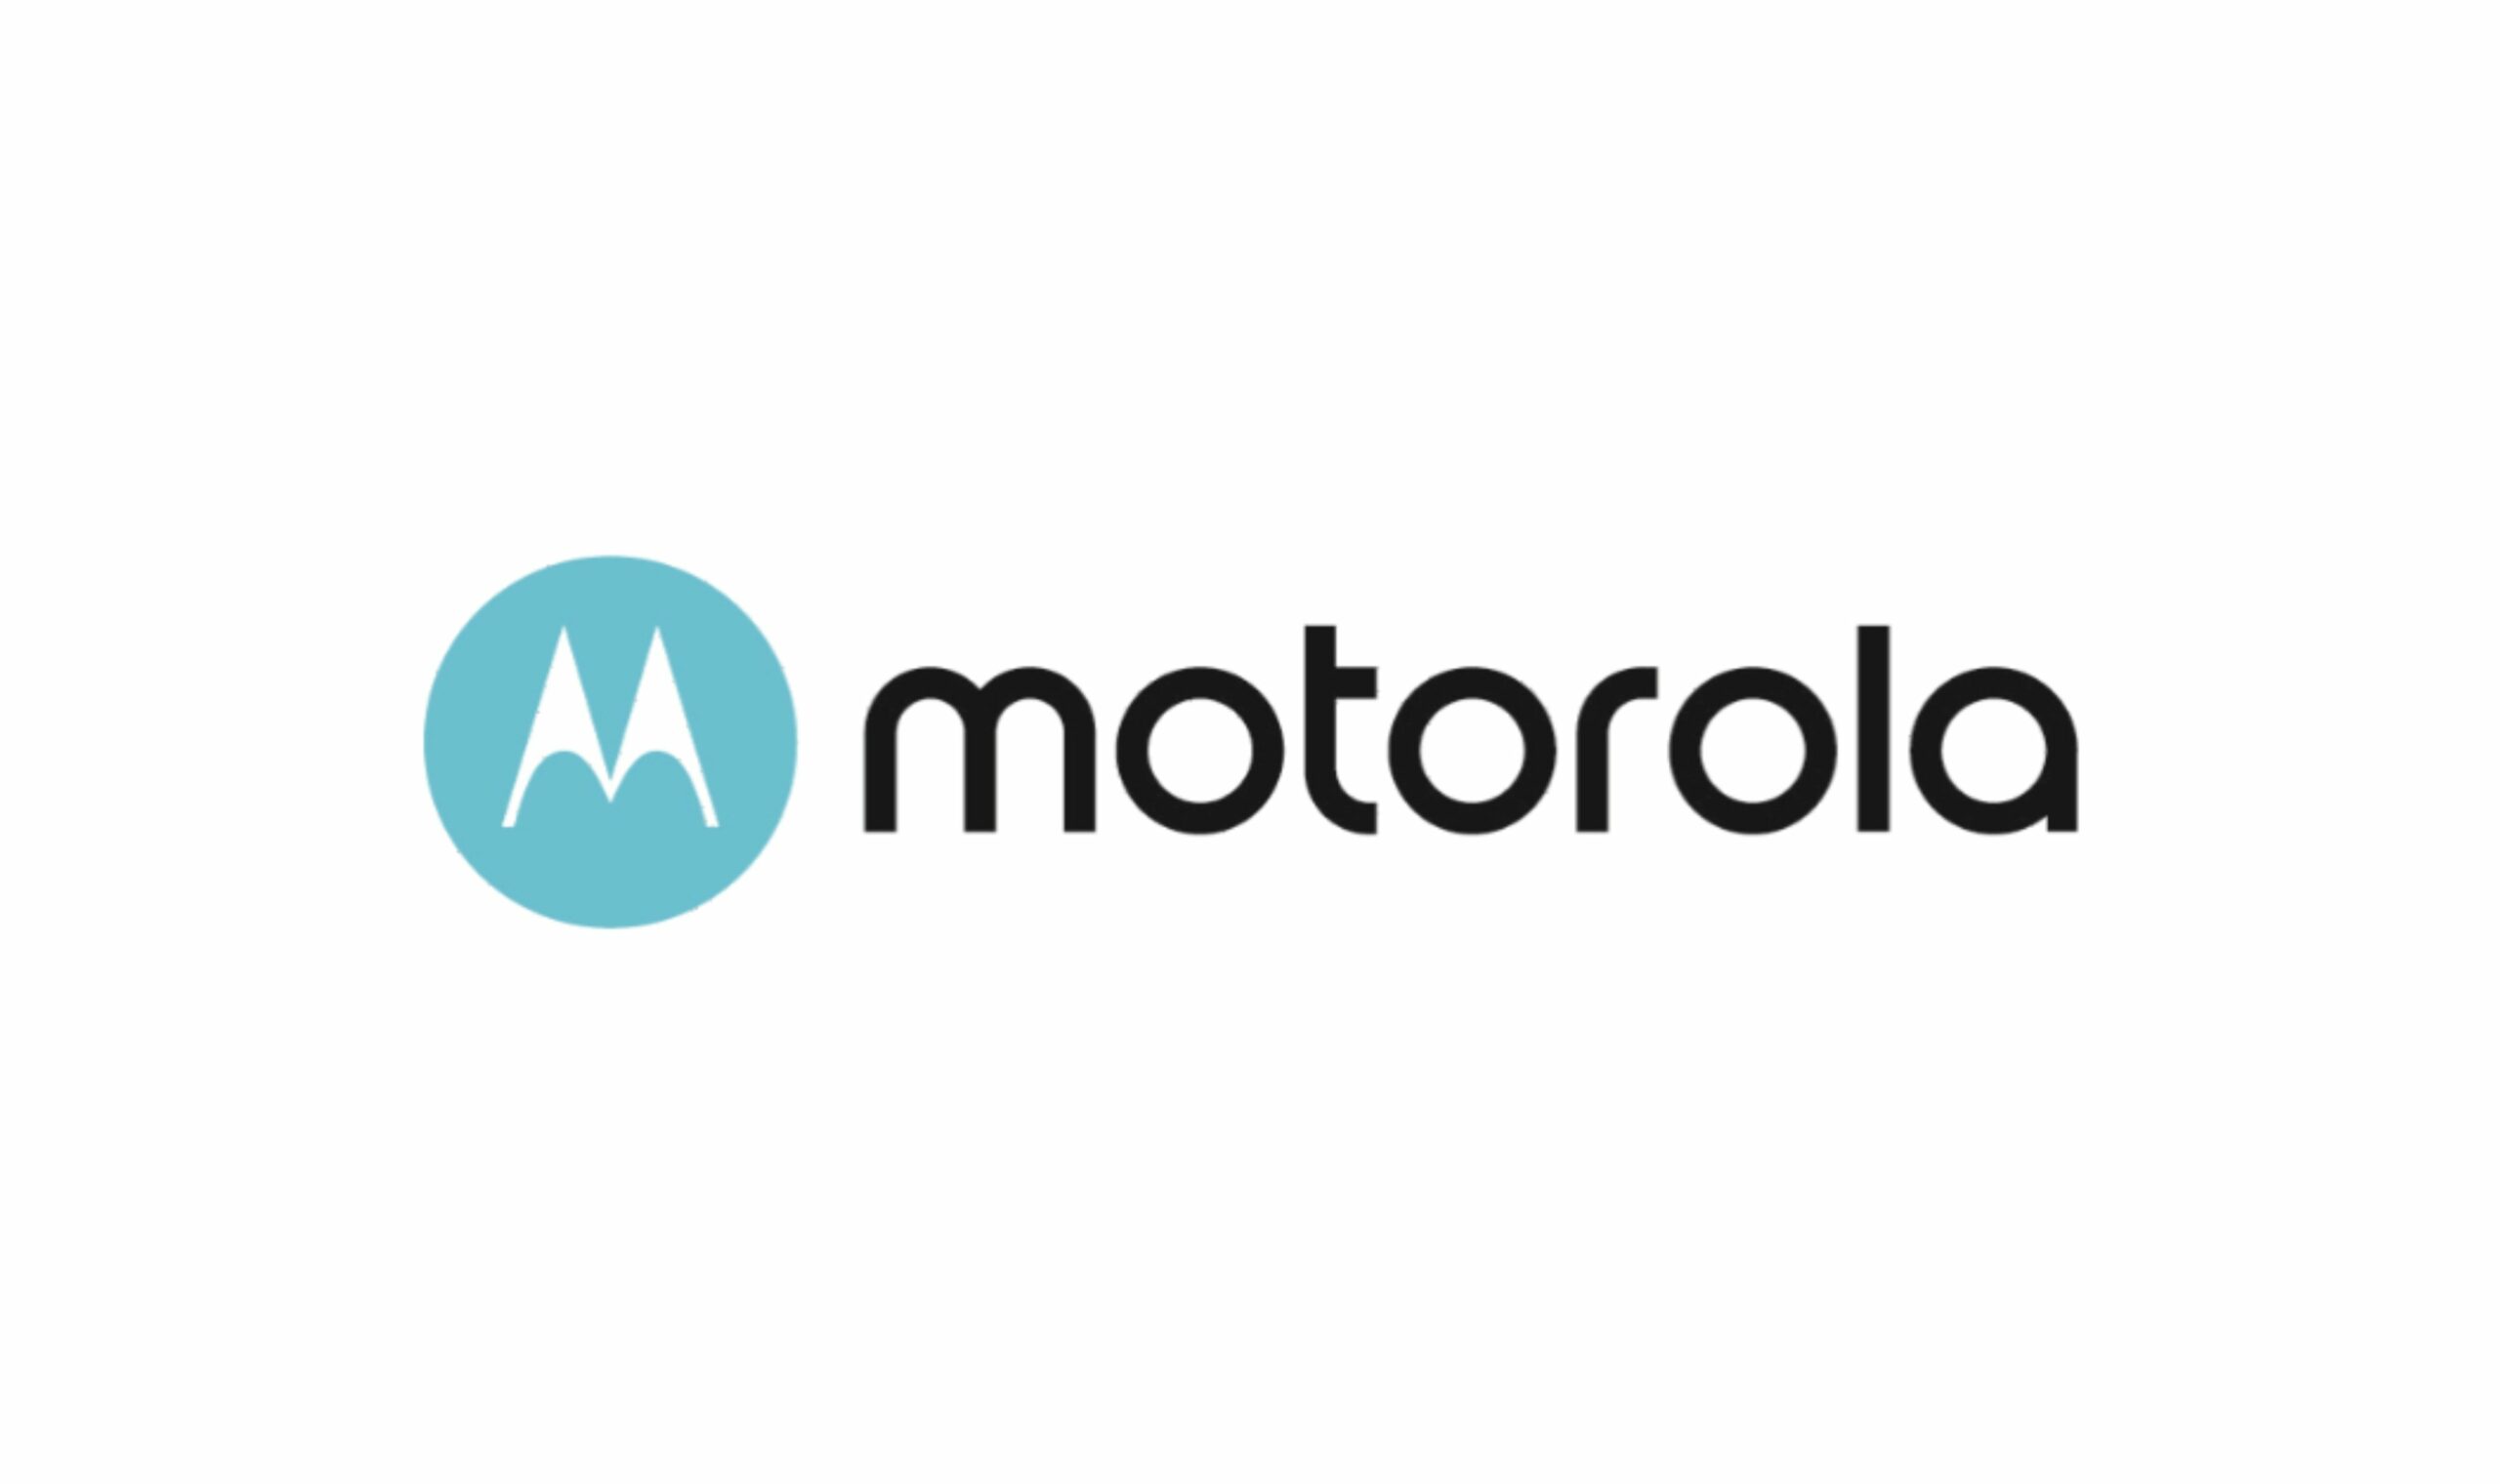 Destacat el logotip de Motorola